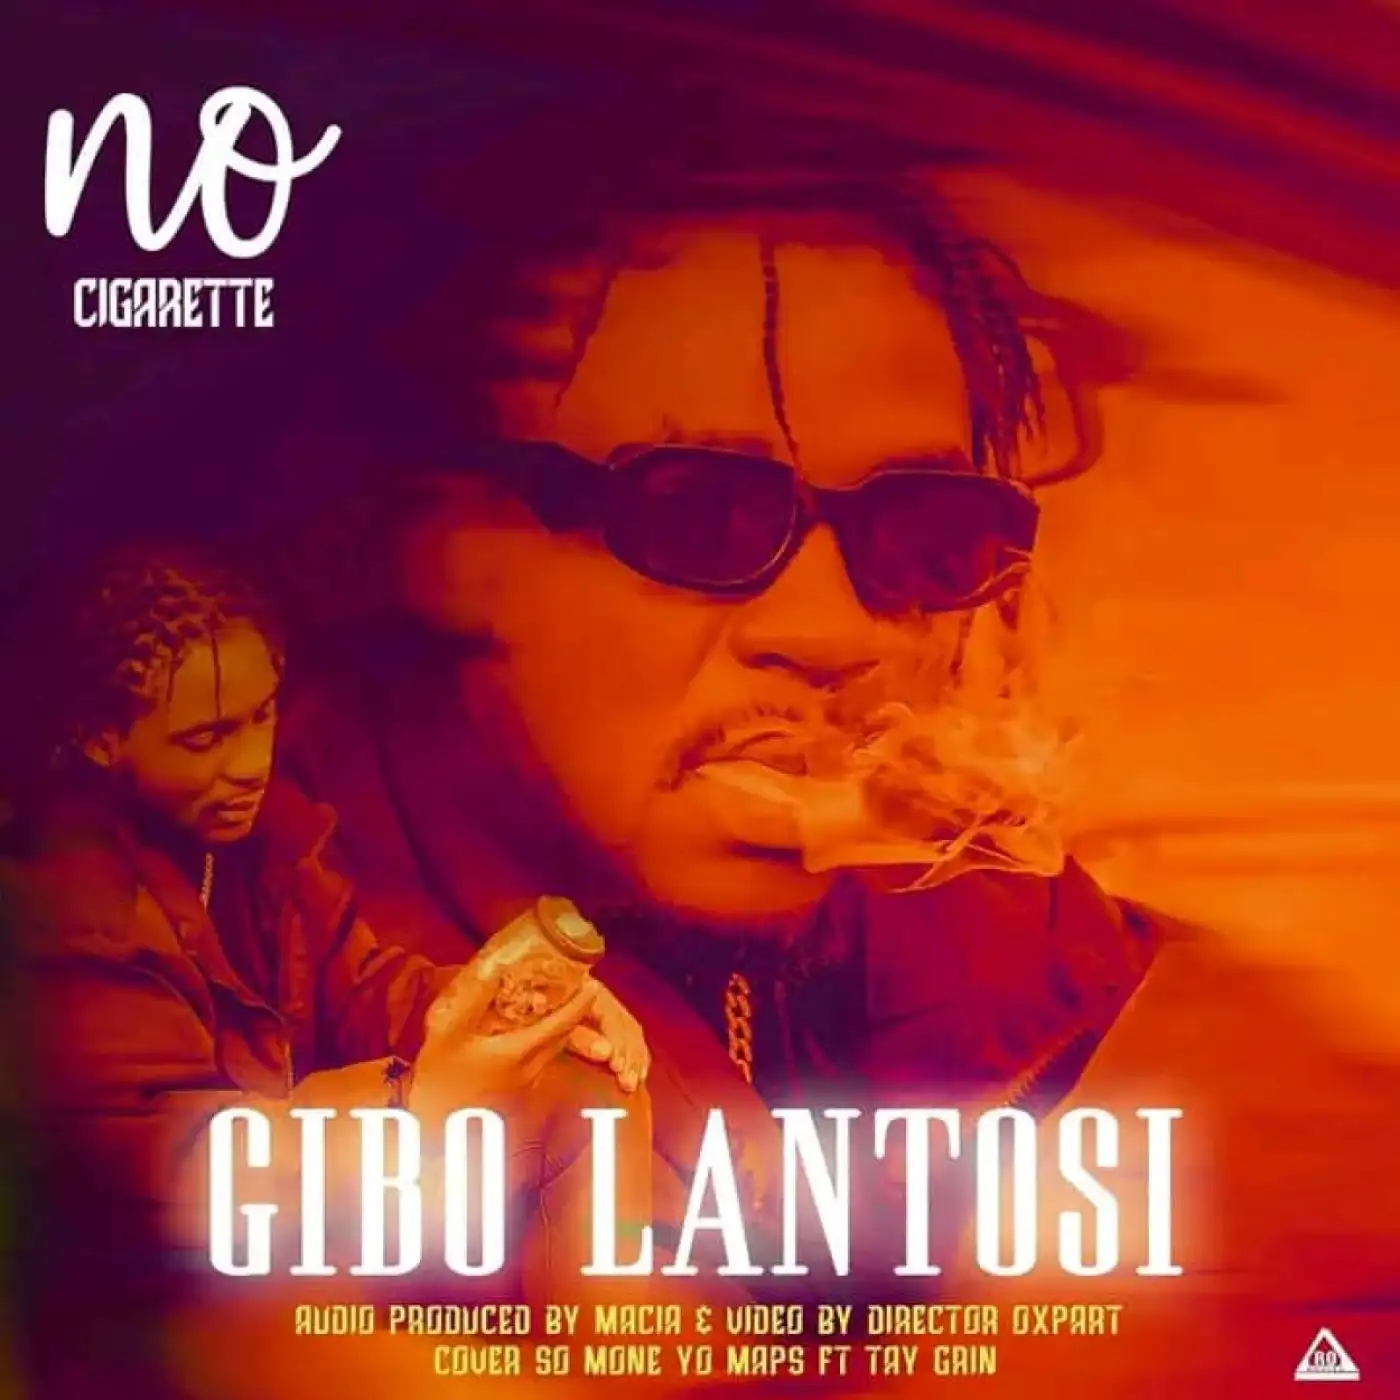 gibo-lantos-no-cigarette-yo-maps-tay-grin-somone-cover-mp3-download-mp3 download